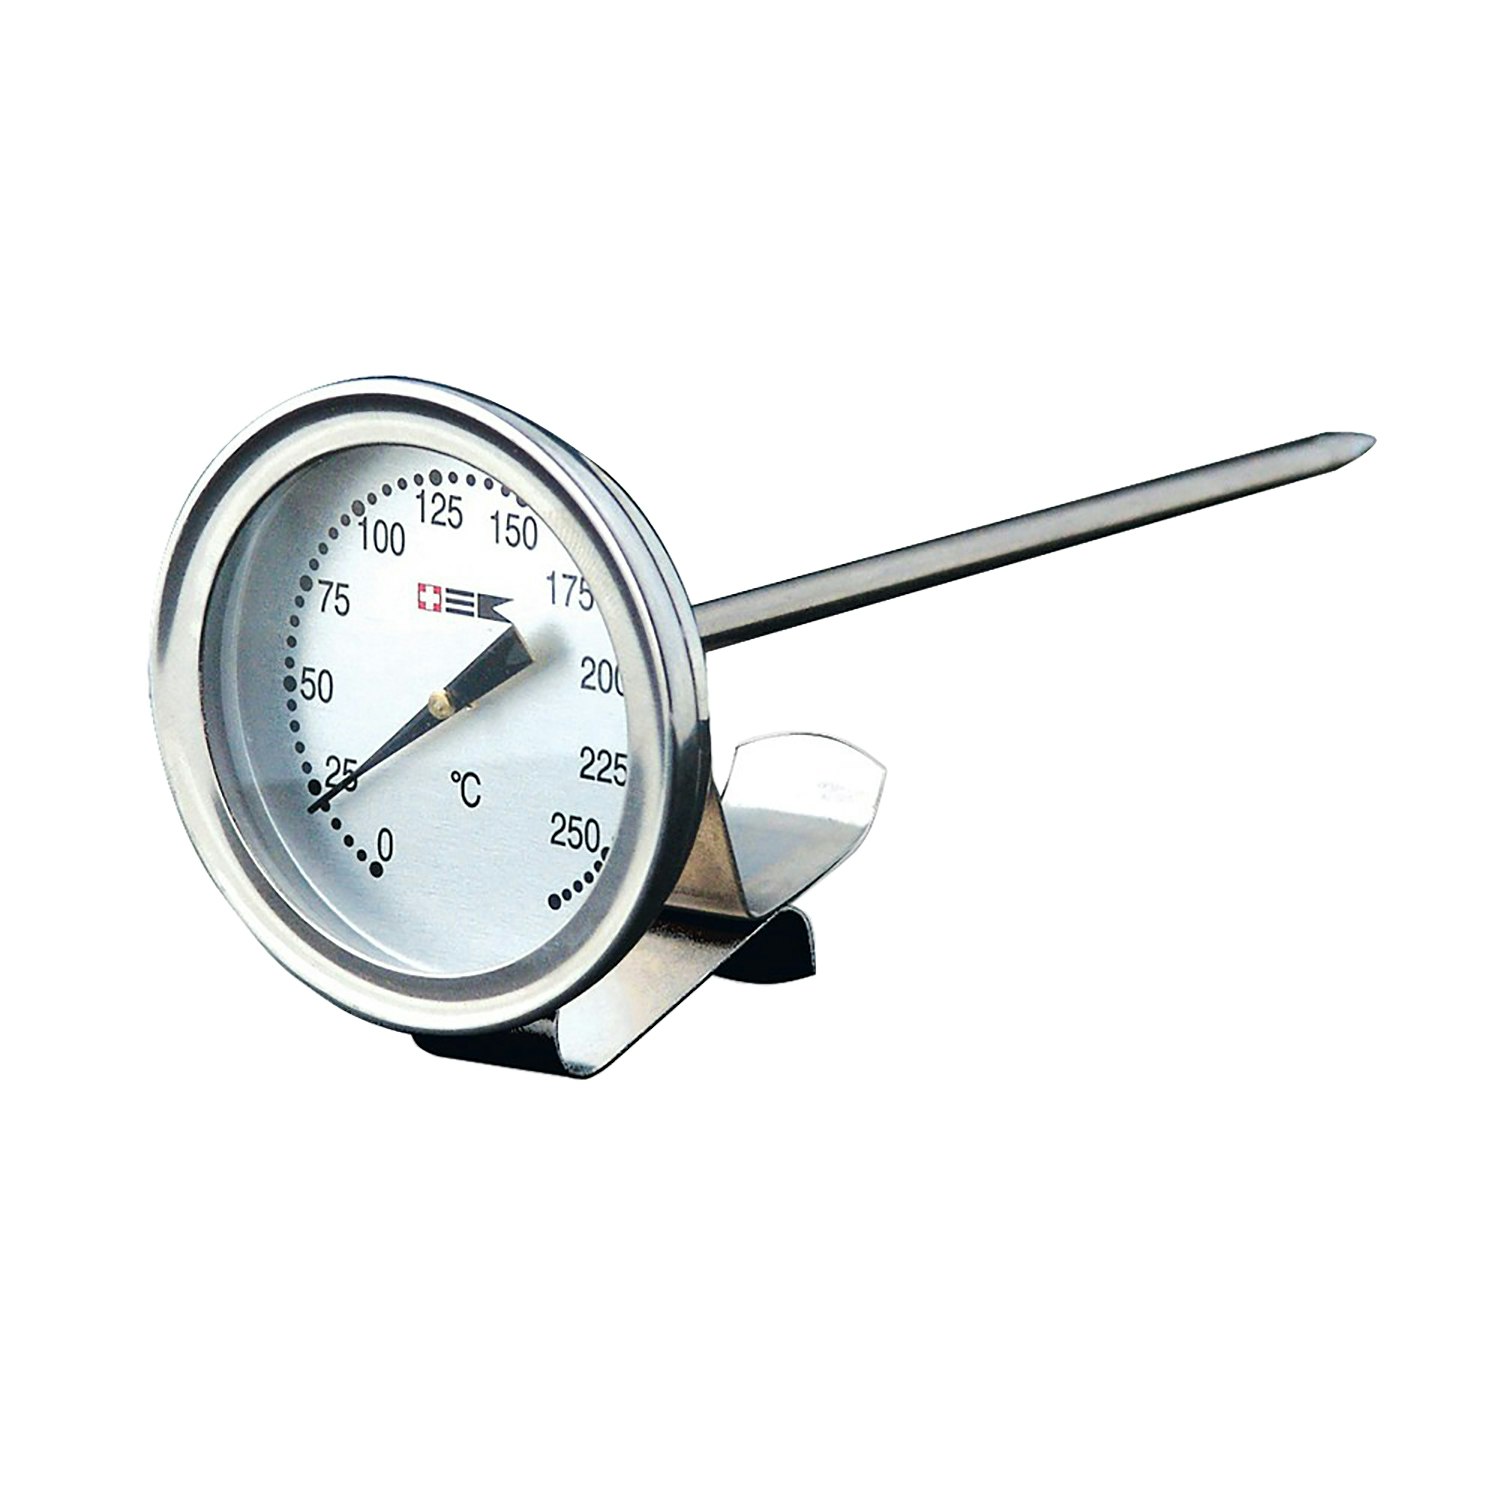 https://royaldesign.com/image/2/bengt-ek-design-deep-fry-thermometer-0-300-c-0